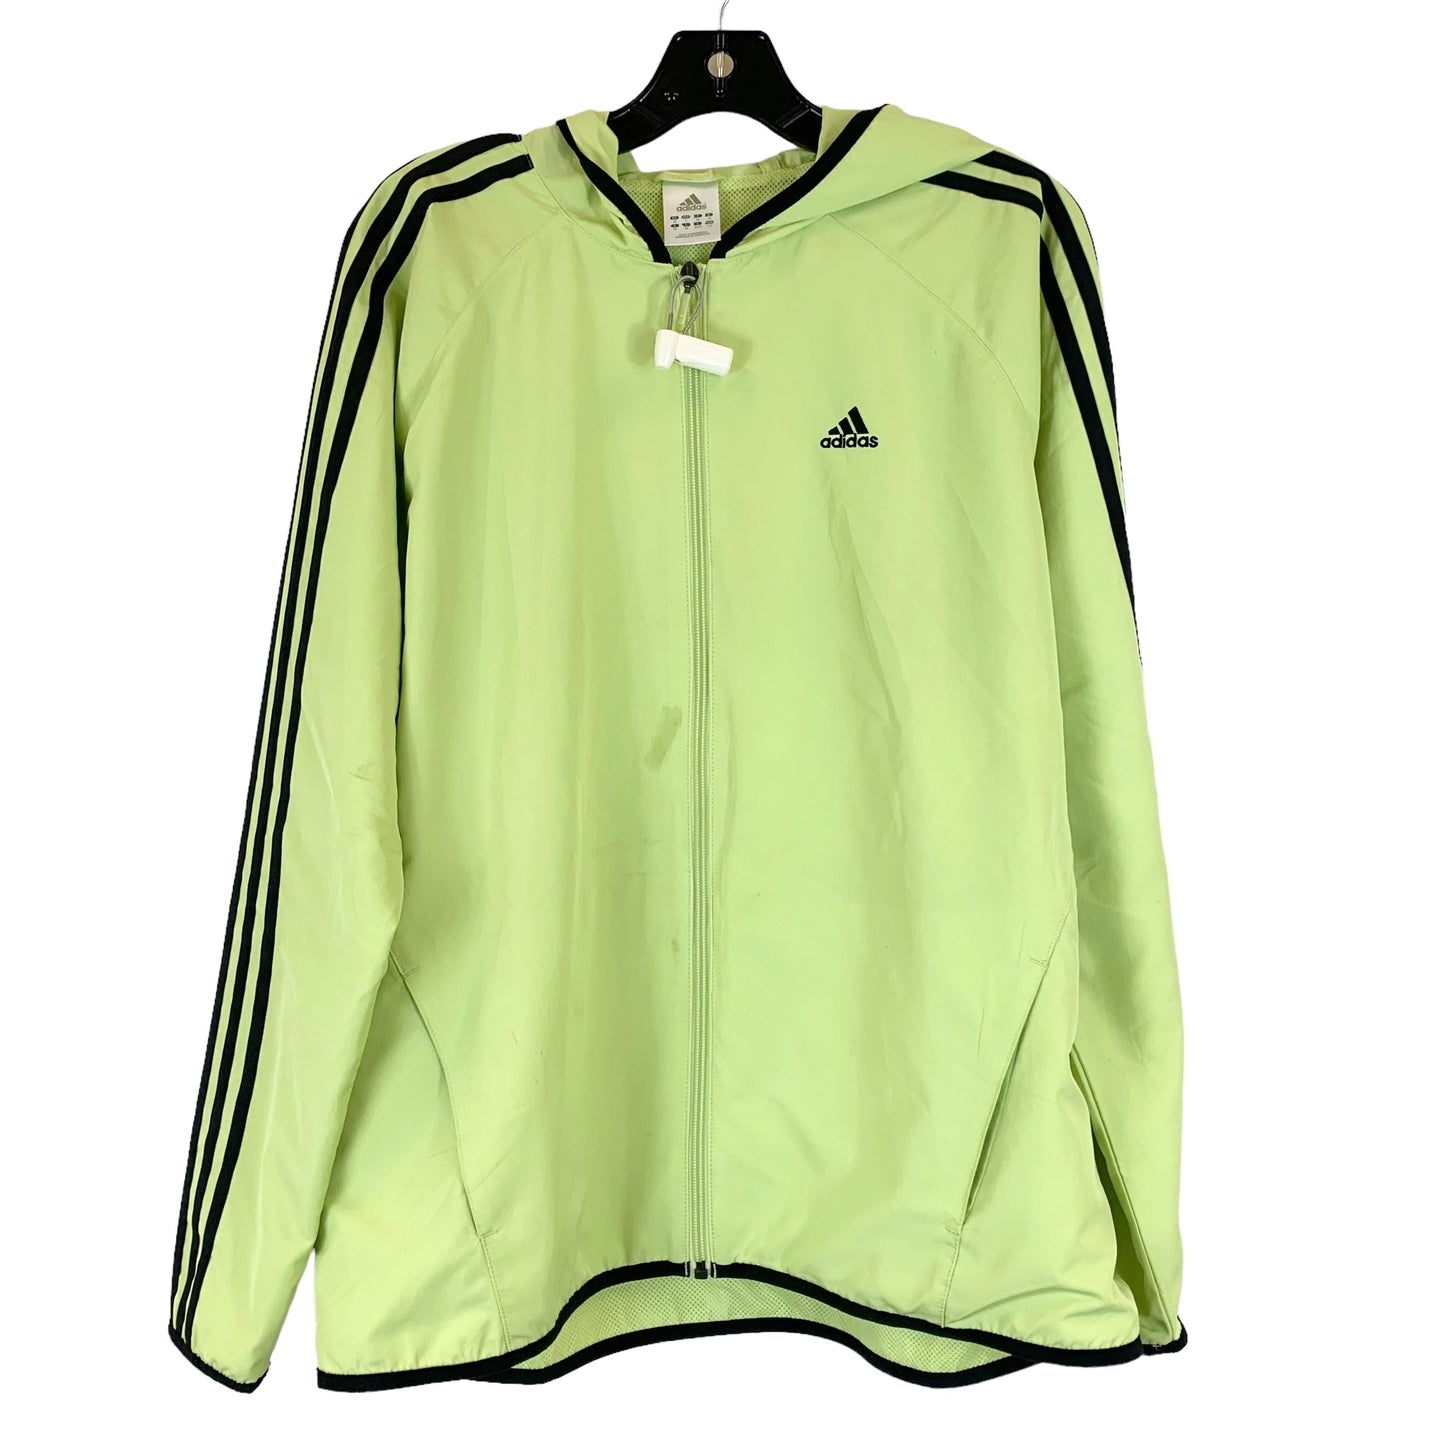 Black & Green Athletic Jacket Adidas, Size L